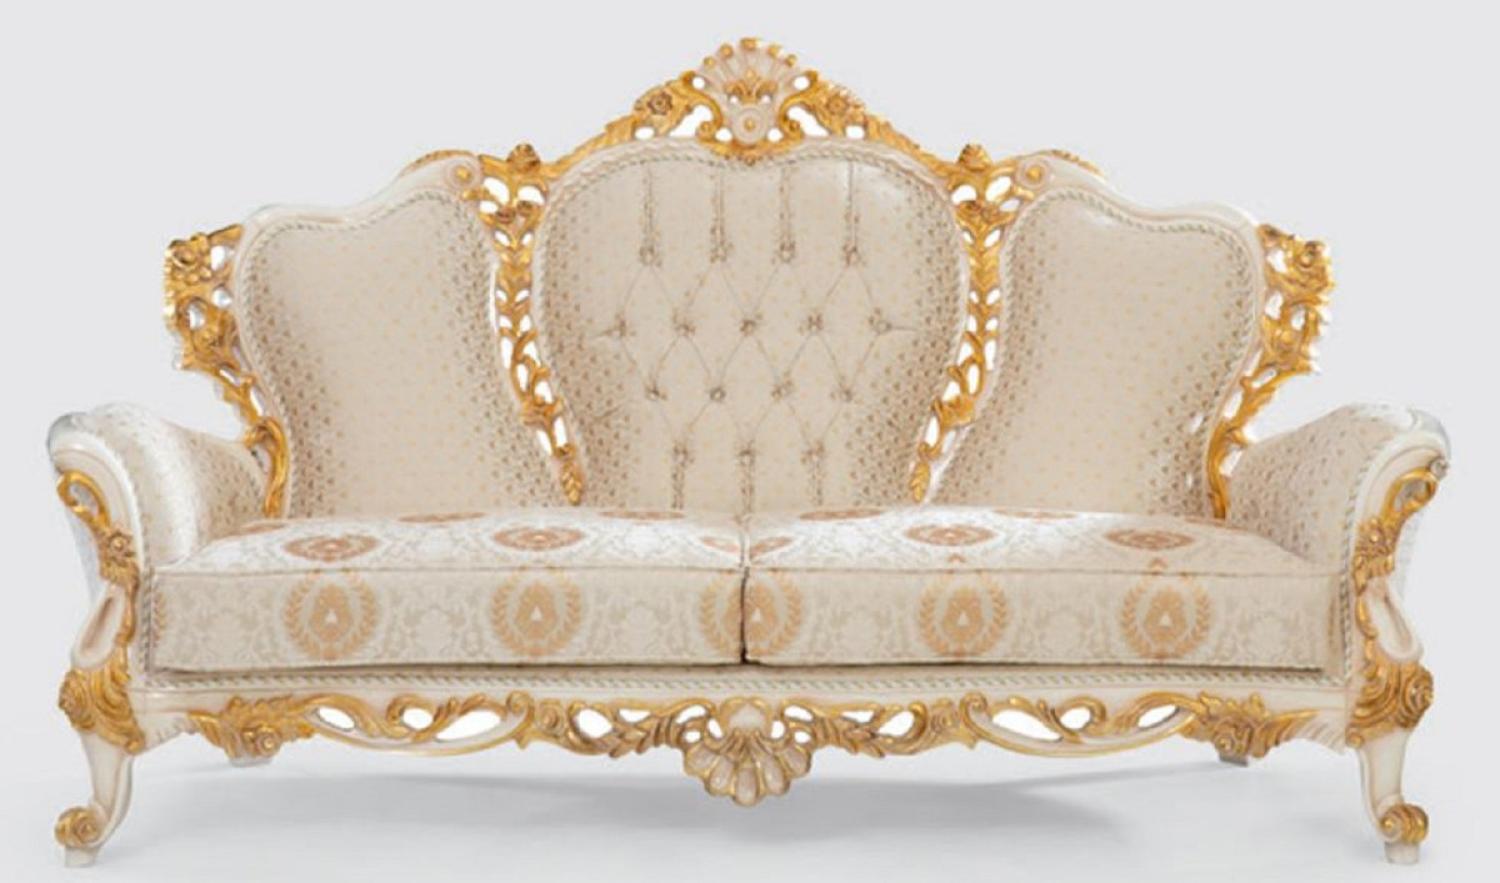 Casa Padrino Luxus Barock Sofa Creme / Weiß / Gold 230 x 95 x H. 130 cm Bild 1